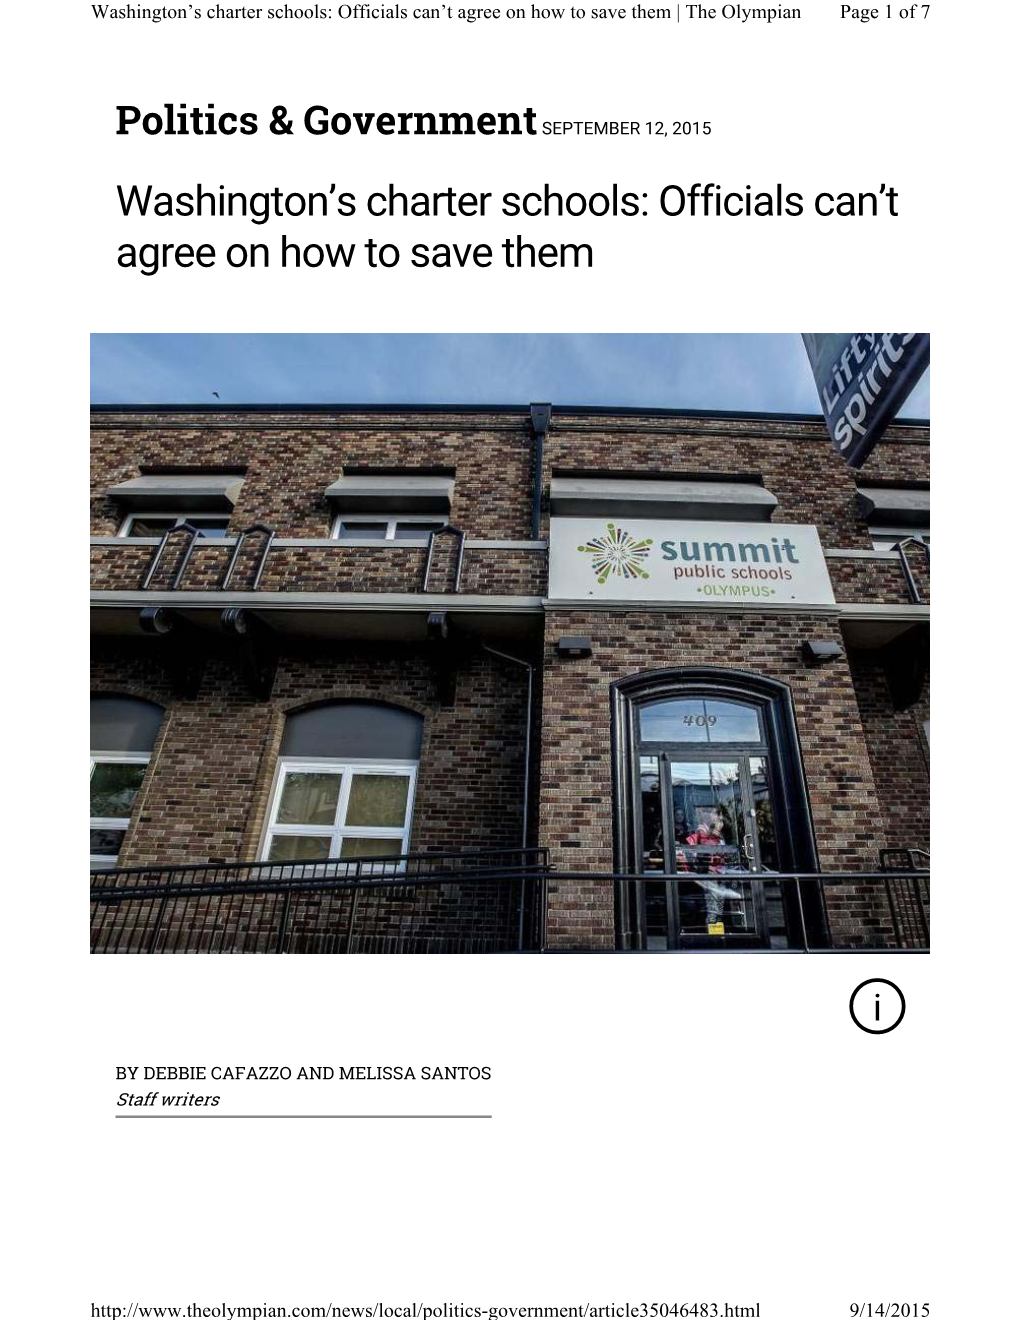 Washington's Charter Schools